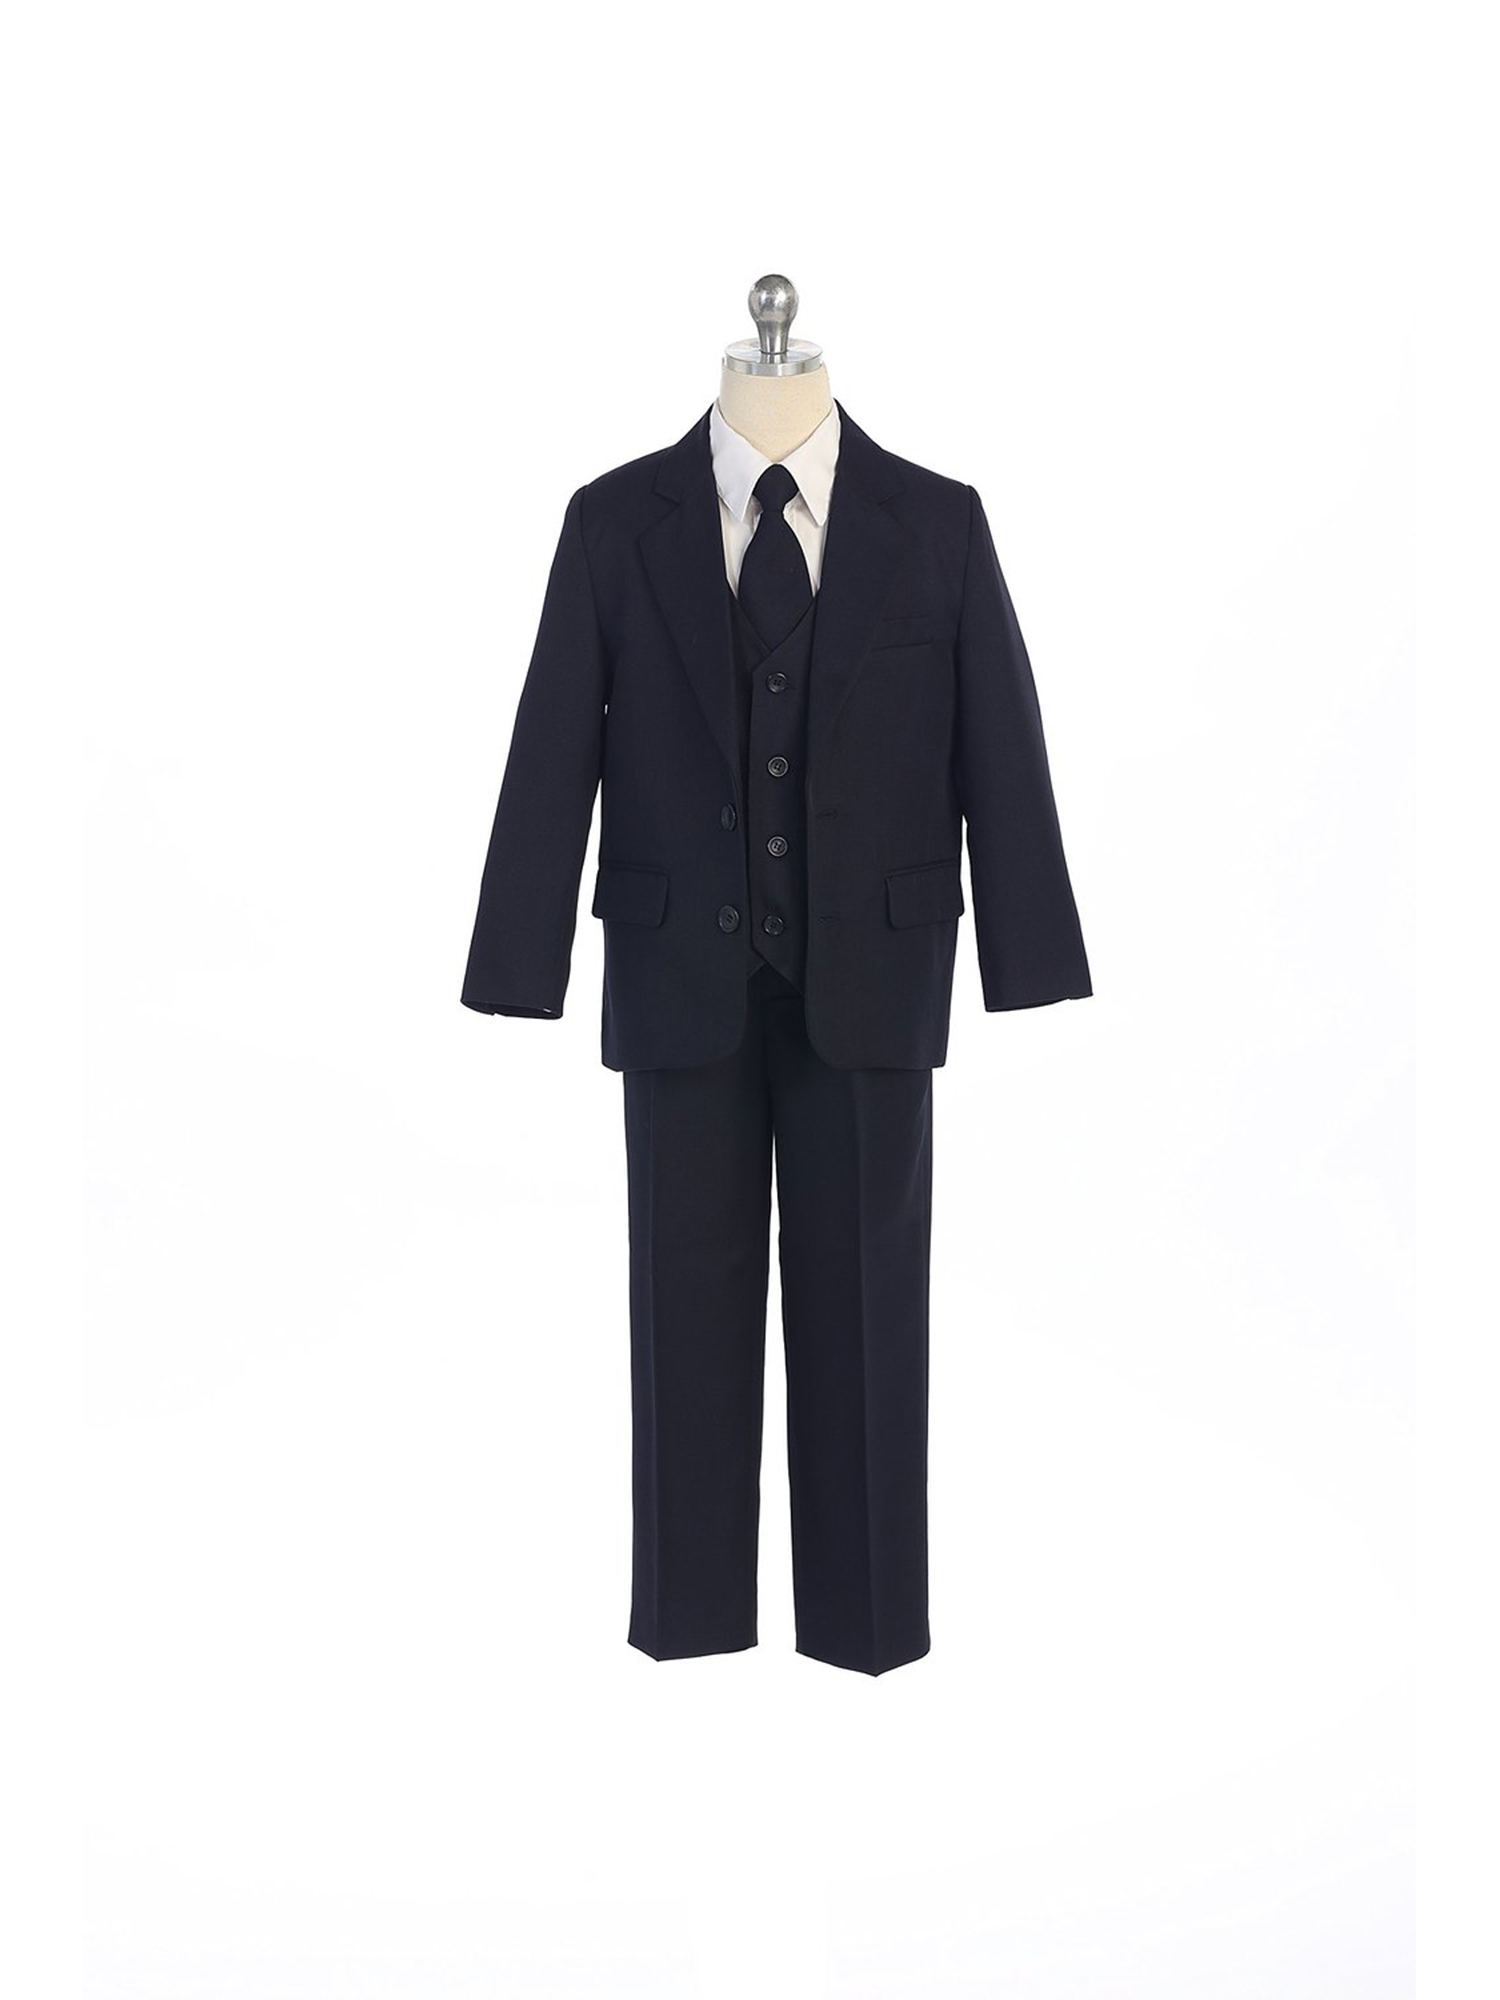 COLE Boys Suit with Shirt and Vest (5-Piece) - Navy Blue - Size 8